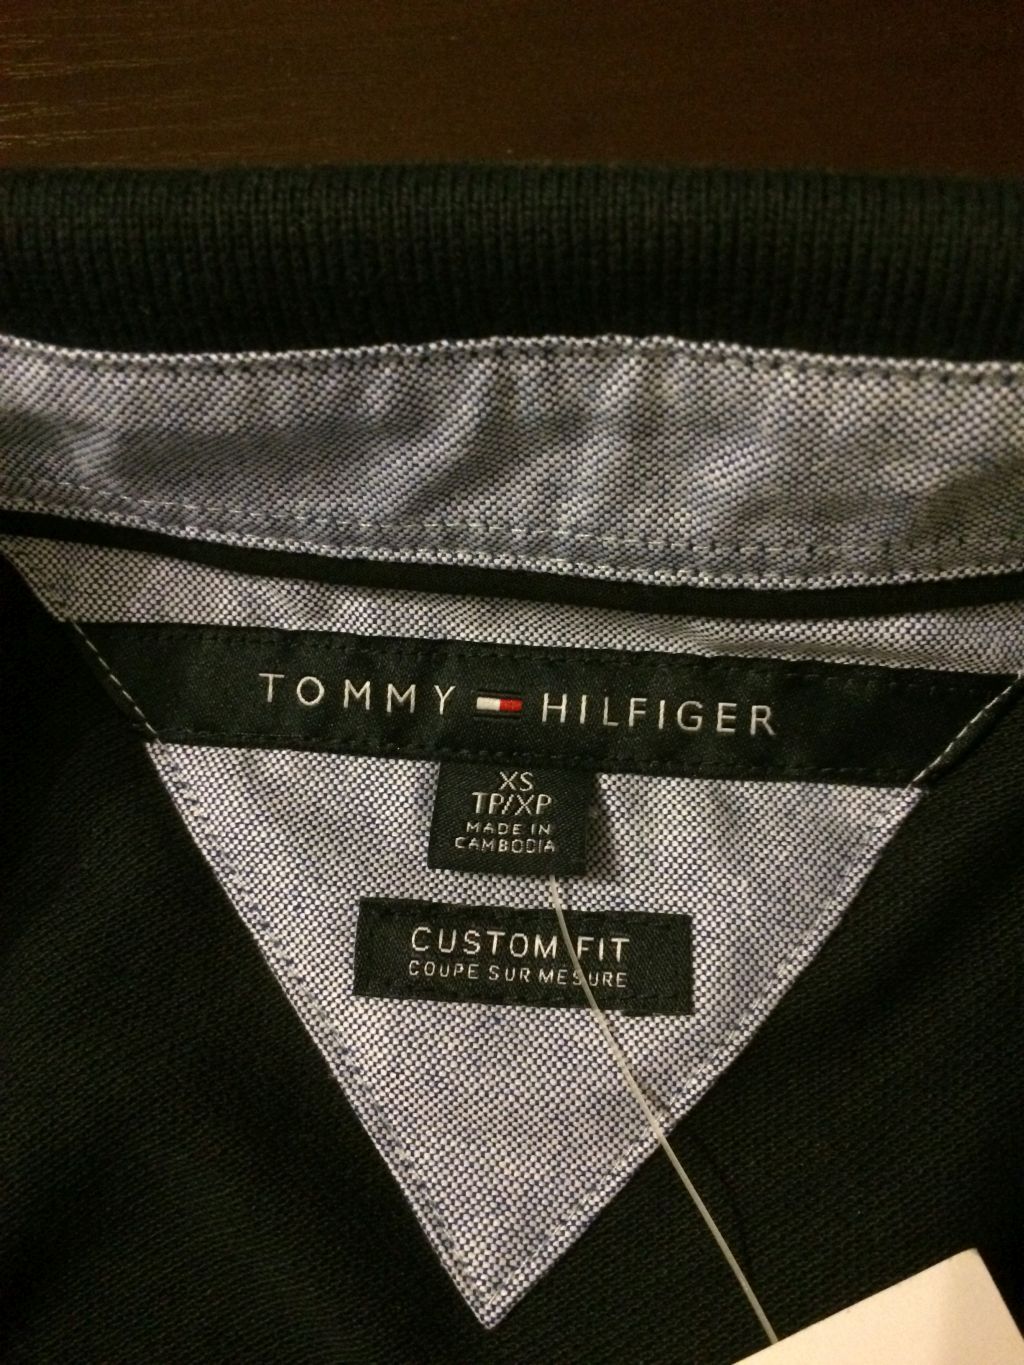 Tommy hilfiger t shirt fake vs real – Key west harley davidson t shirts ...